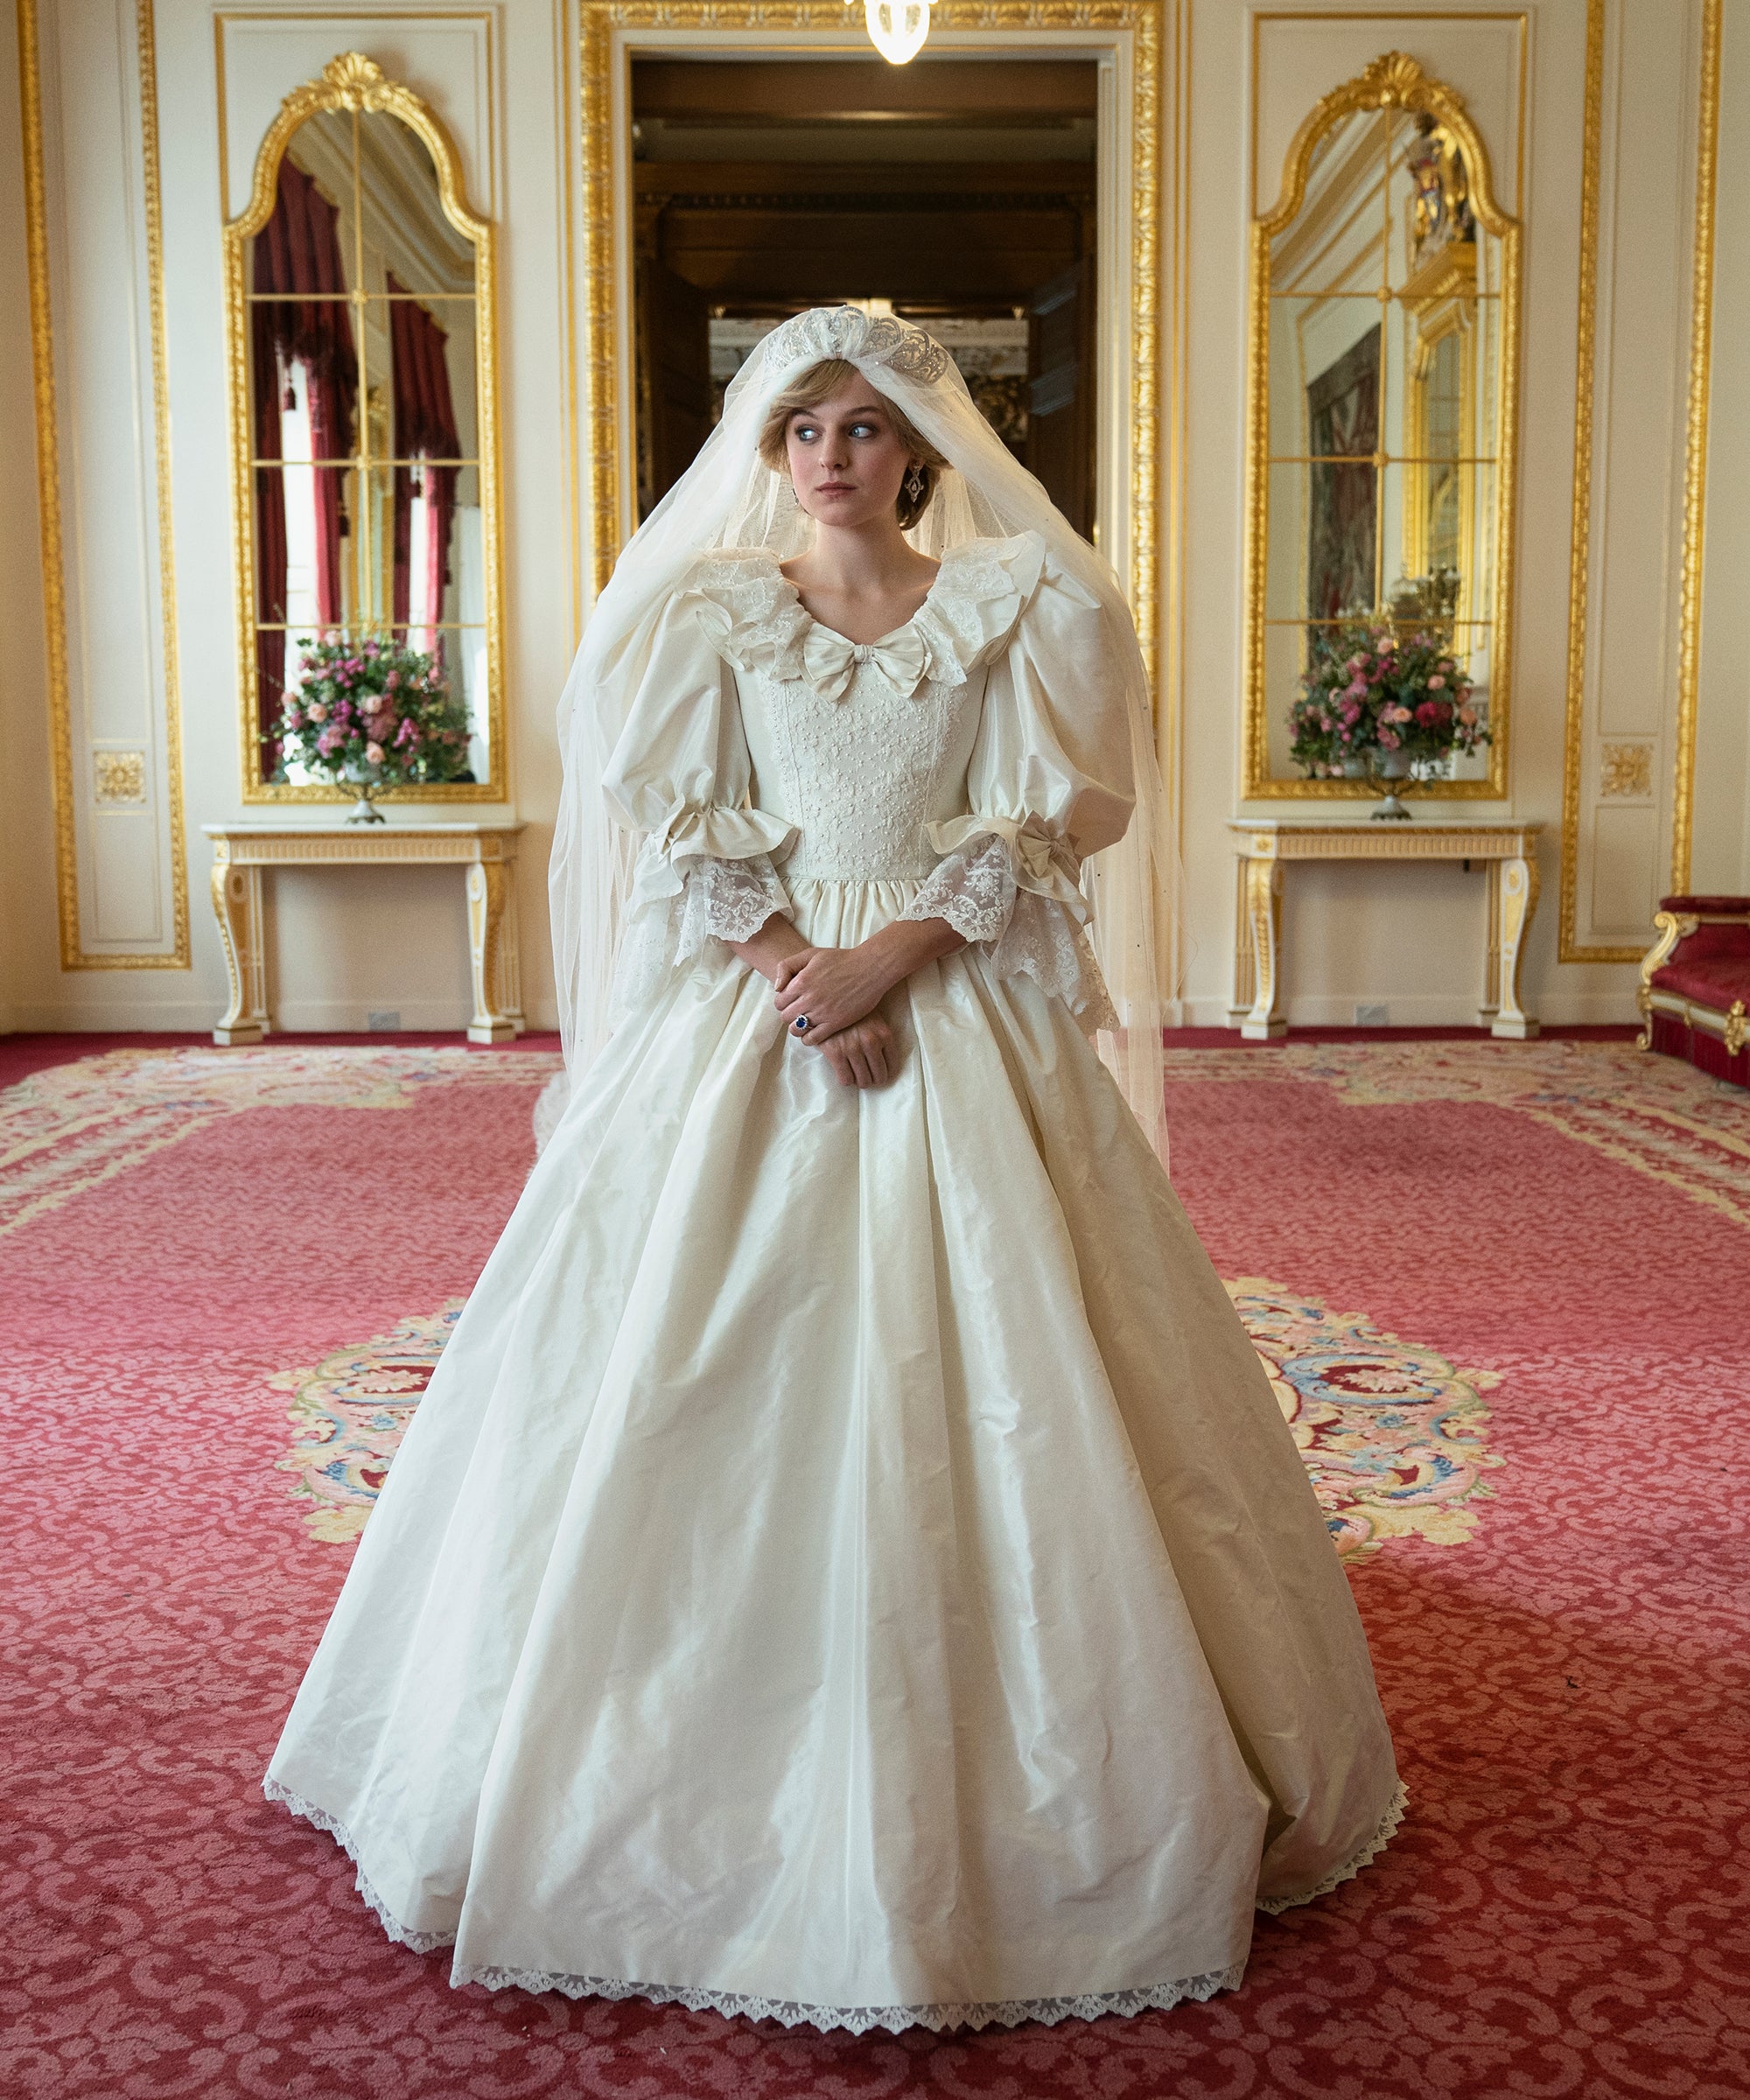 Diana's wedding dress designer on 'ultimate fairy princess' gown